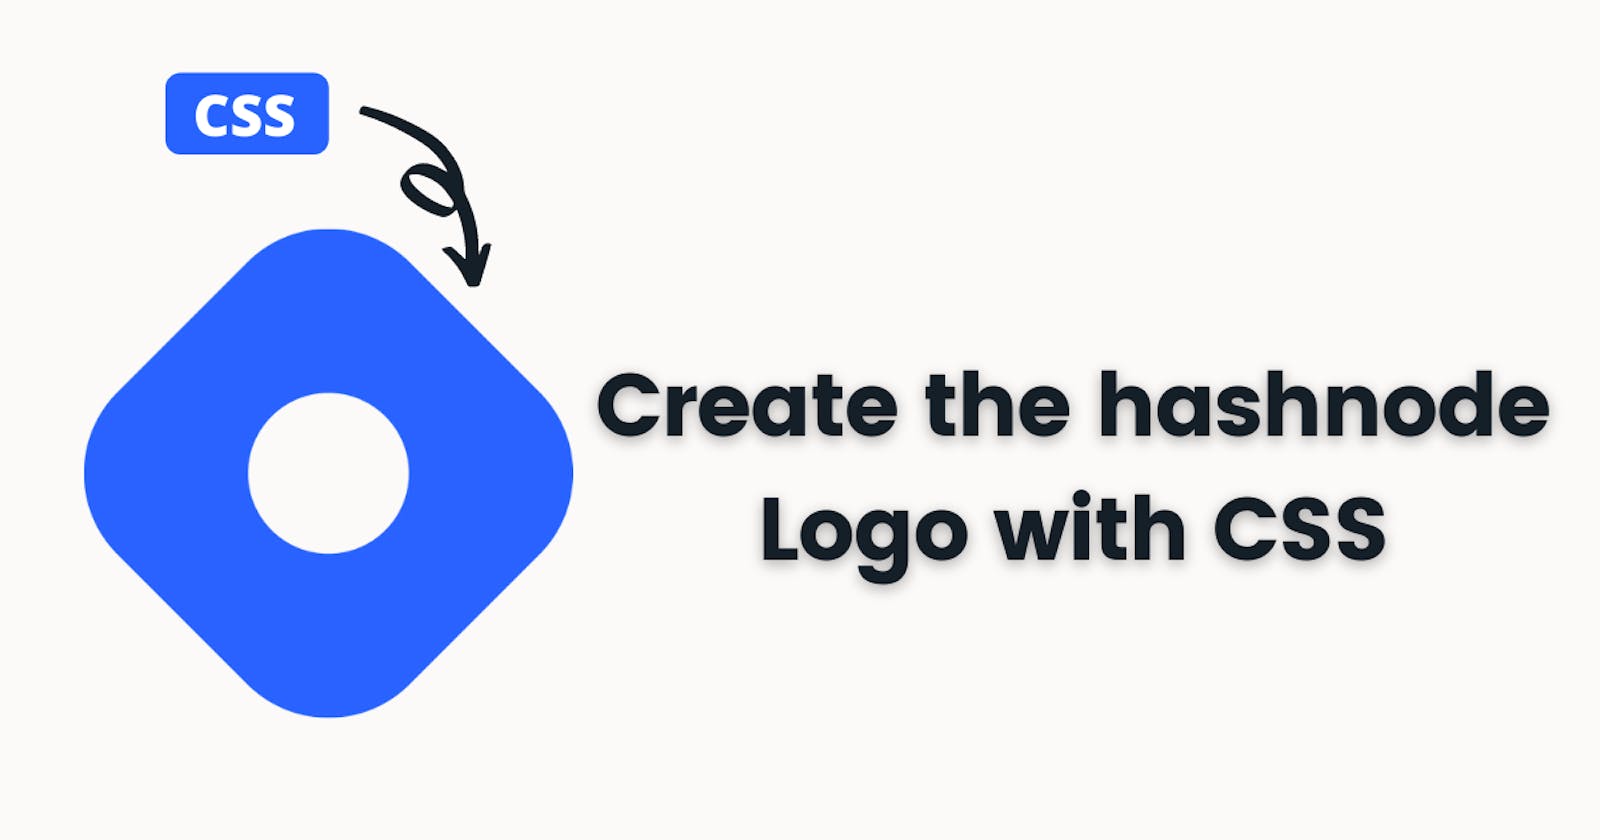 Create the hashnode logo with CSS